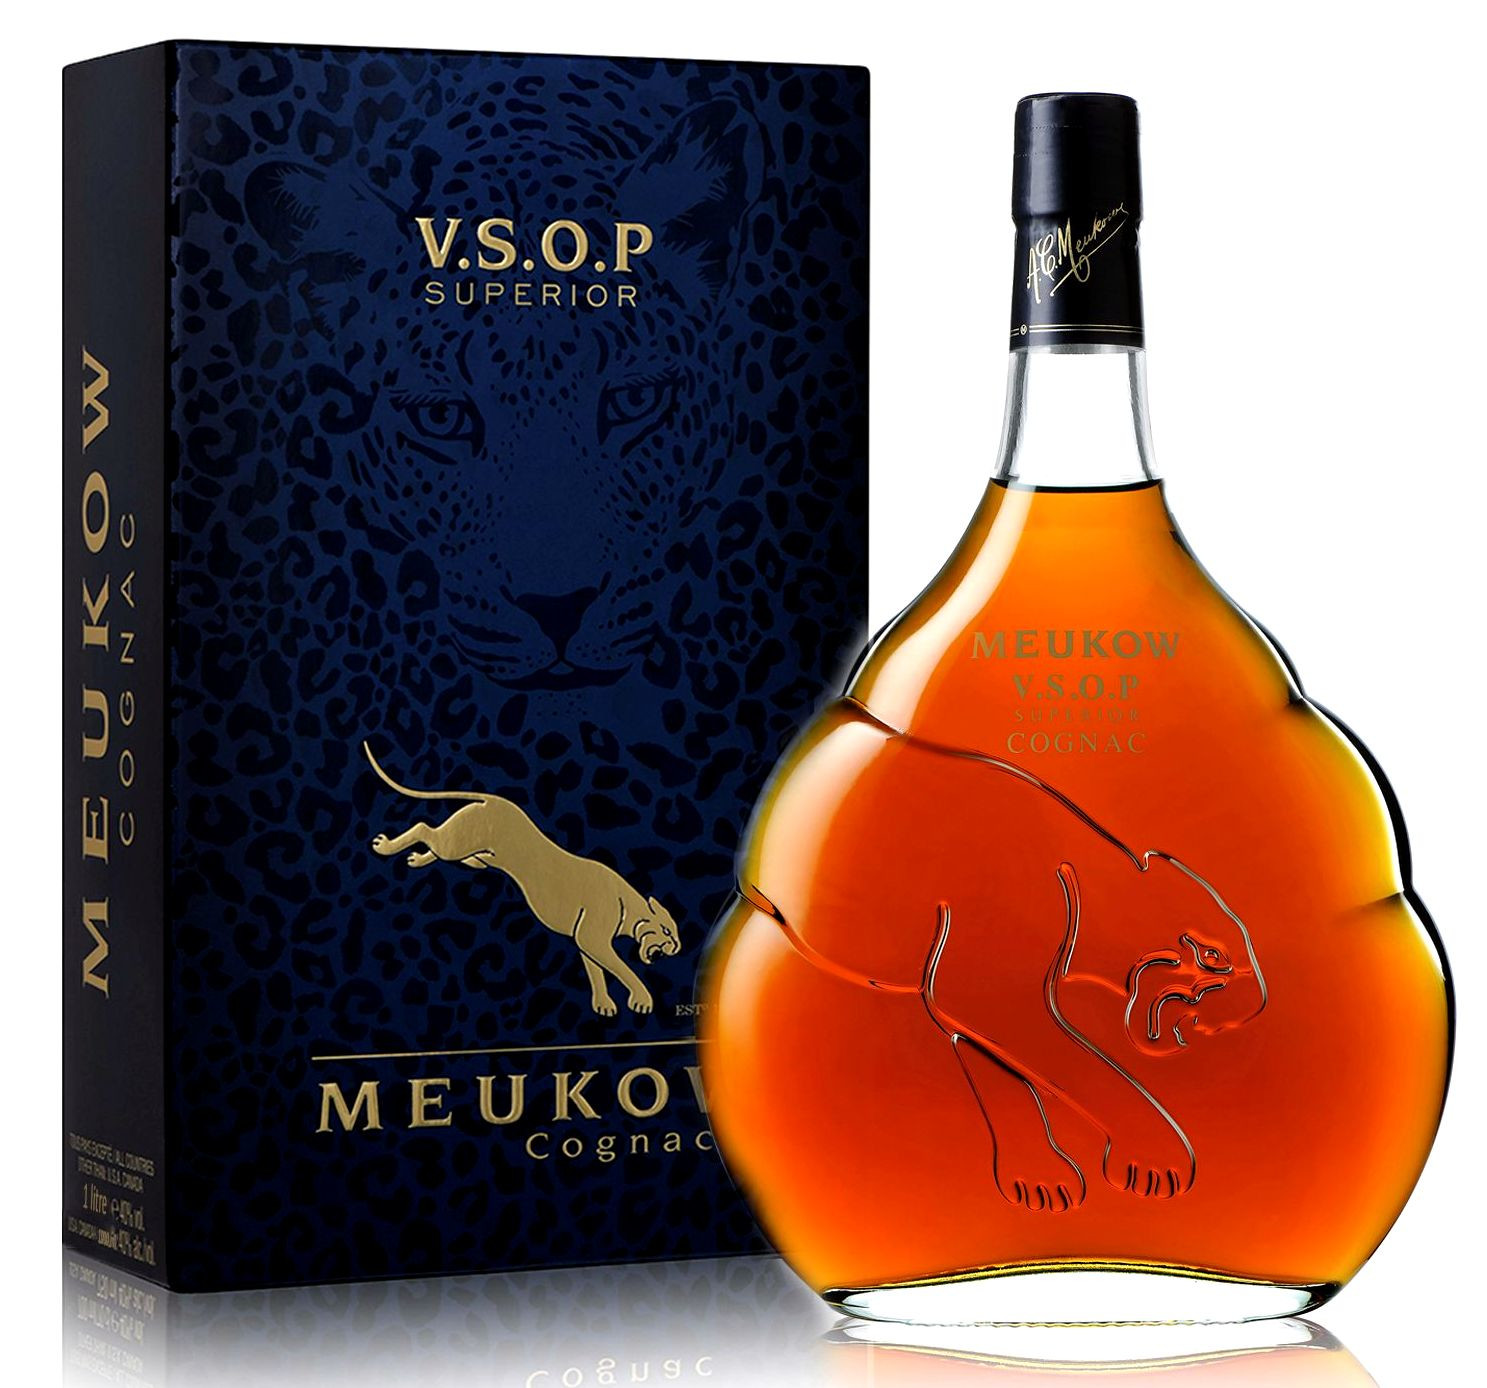 Meukow Cognac VSOP 0,7l